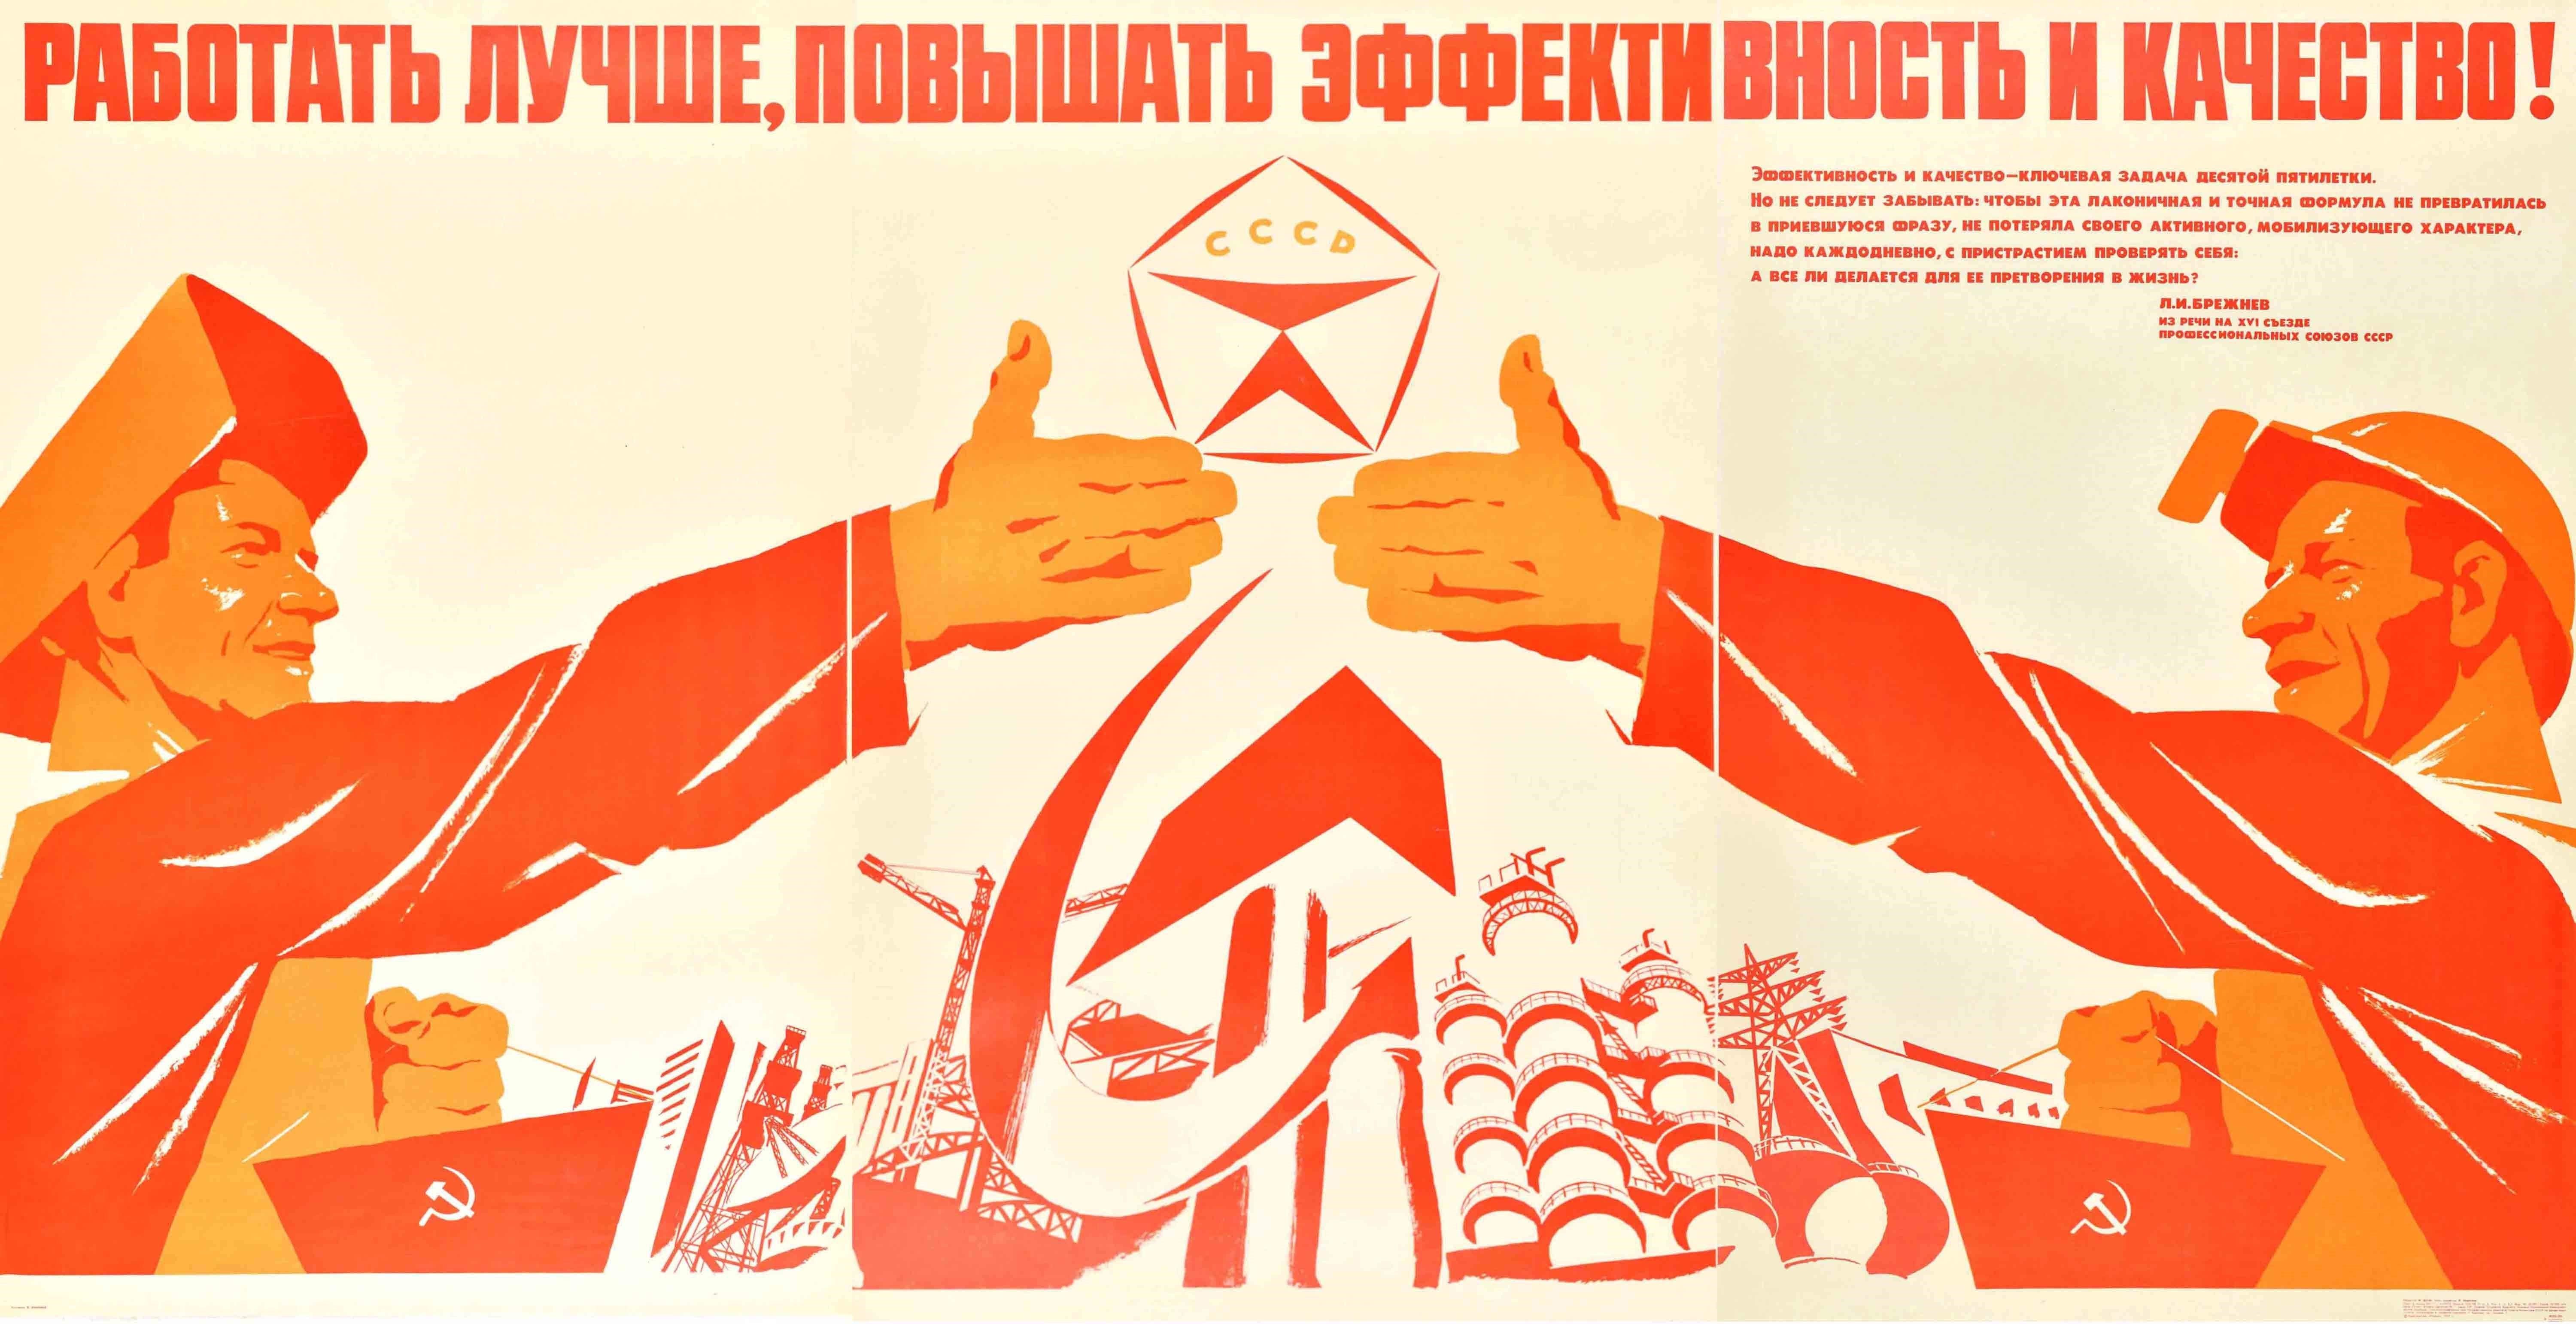 Originales sowjetisches Vintage-Poster Work Better Industry Efficiency Quality, UdSSR, CCCP – Print von V. Kononov